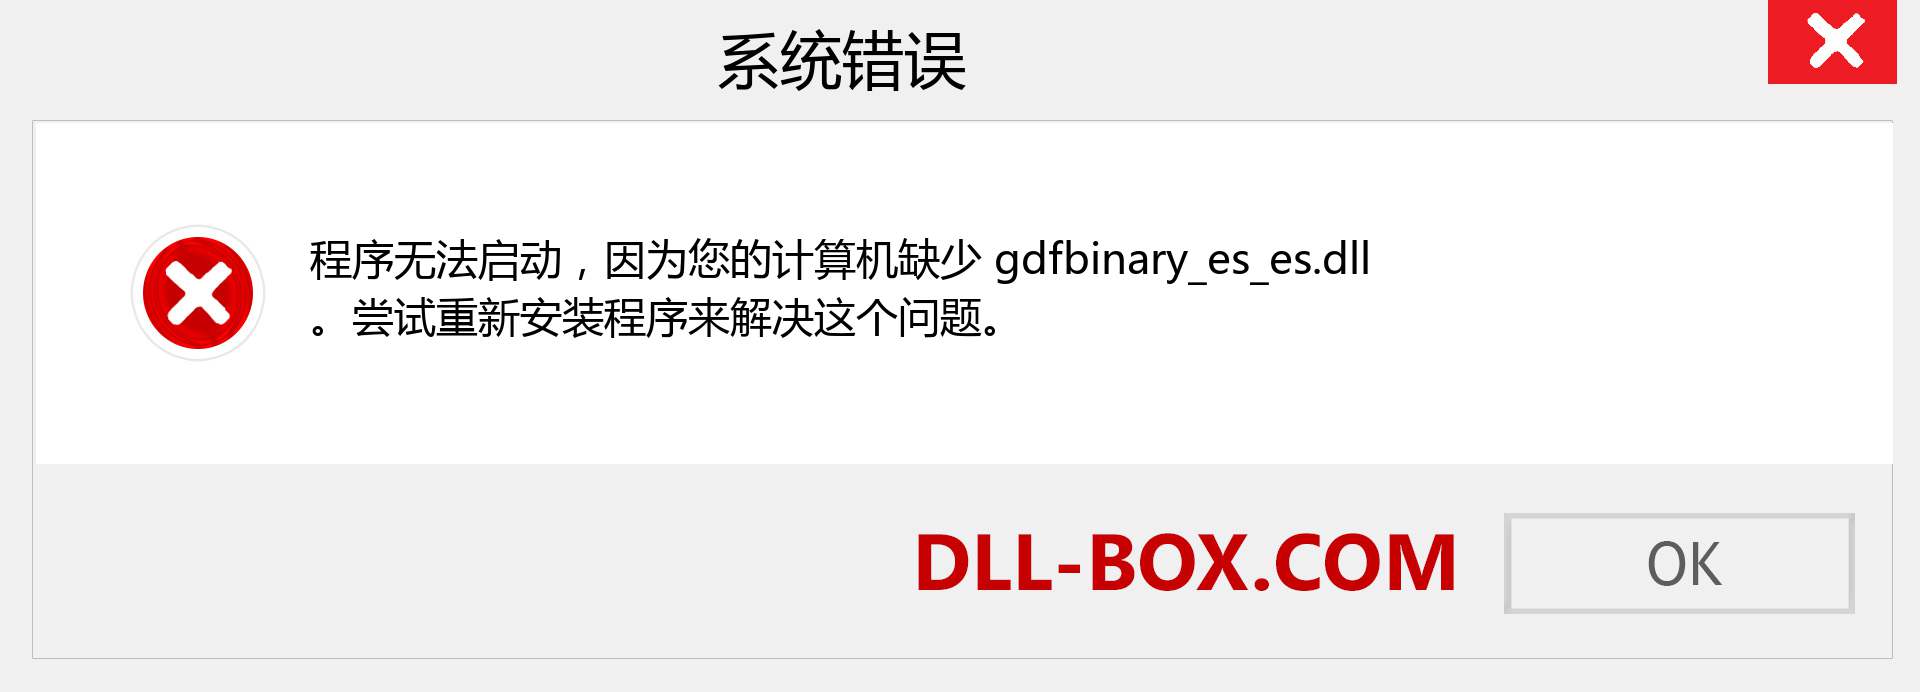 gdfbinary_es_es.dll 文件丢失？。 适用于 Windows 7、8、10 的下载 - 修复 Windows、照片、图像上的 gdfbinary_es_es dll 丢失错误